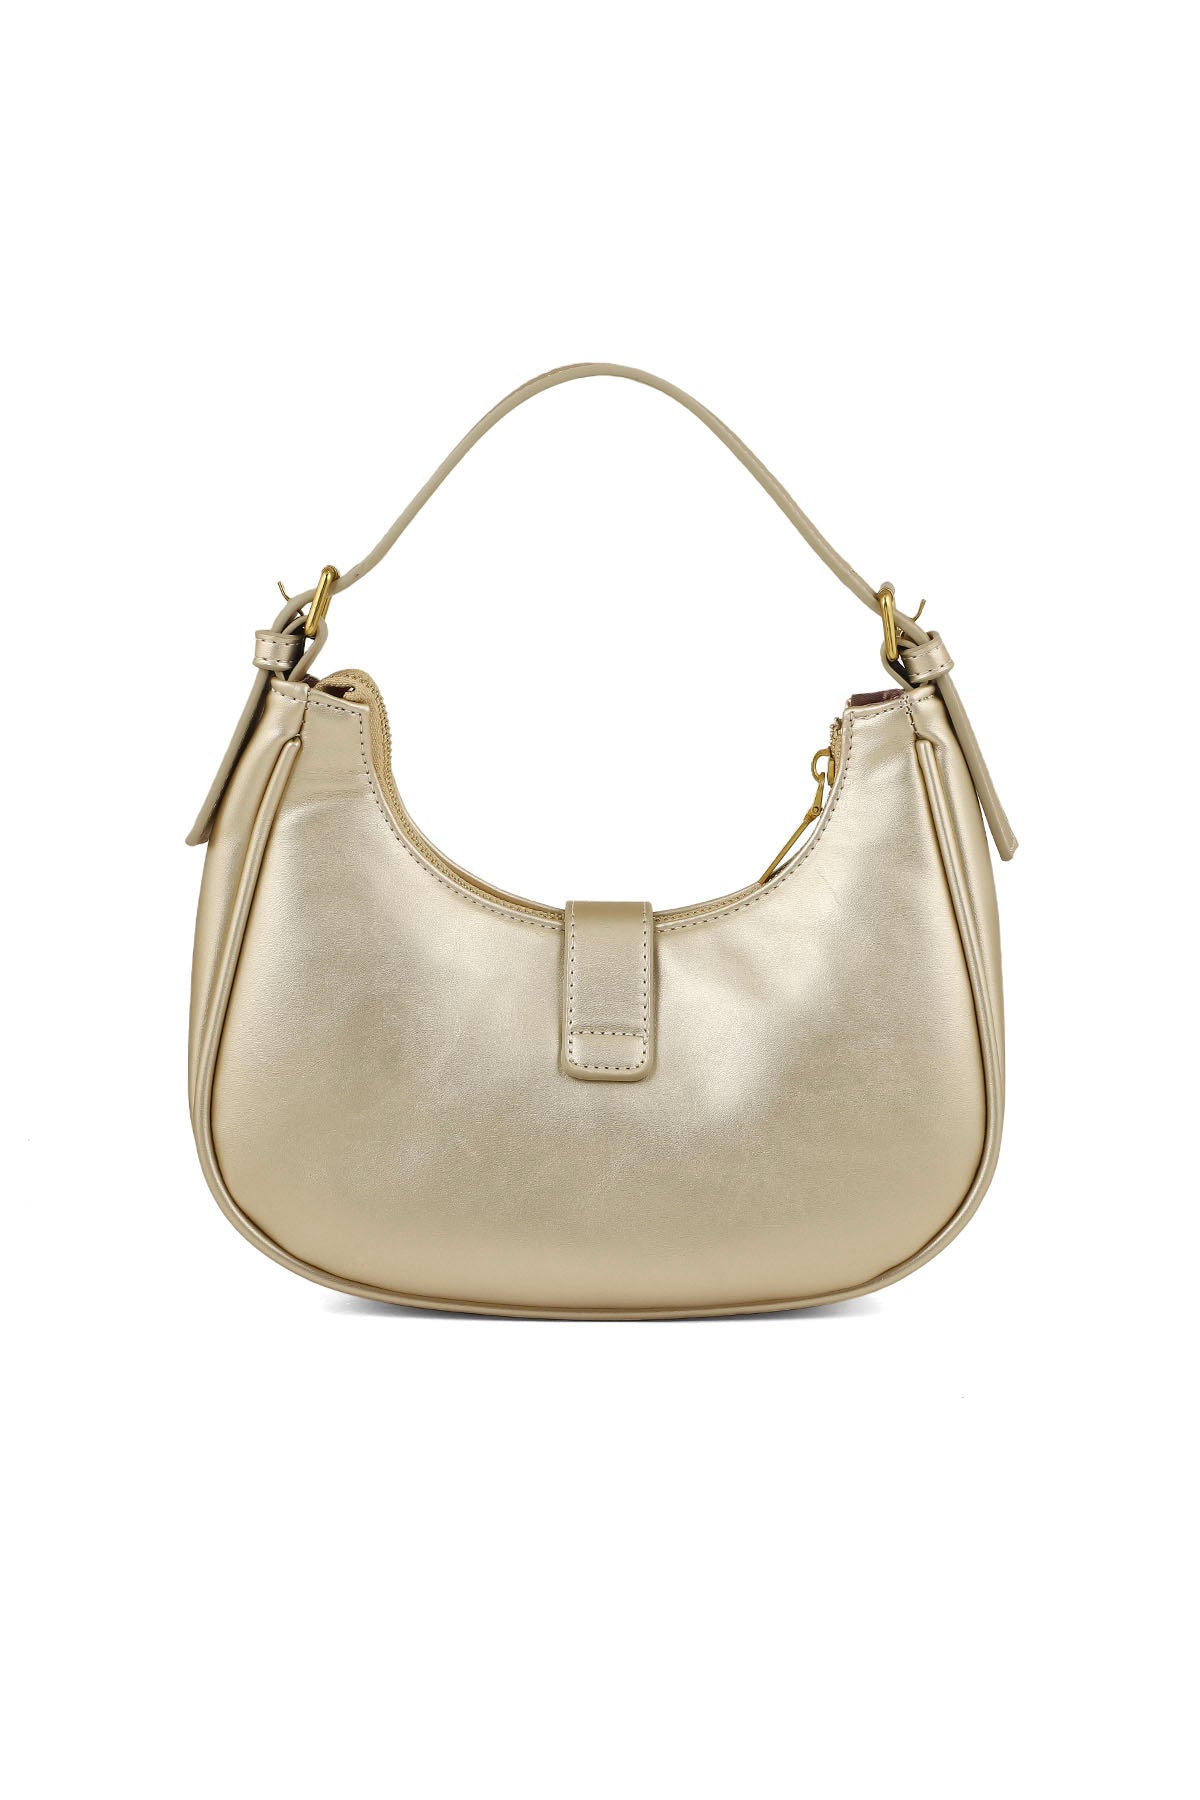 Hobo Hand Bags B15089-Golden